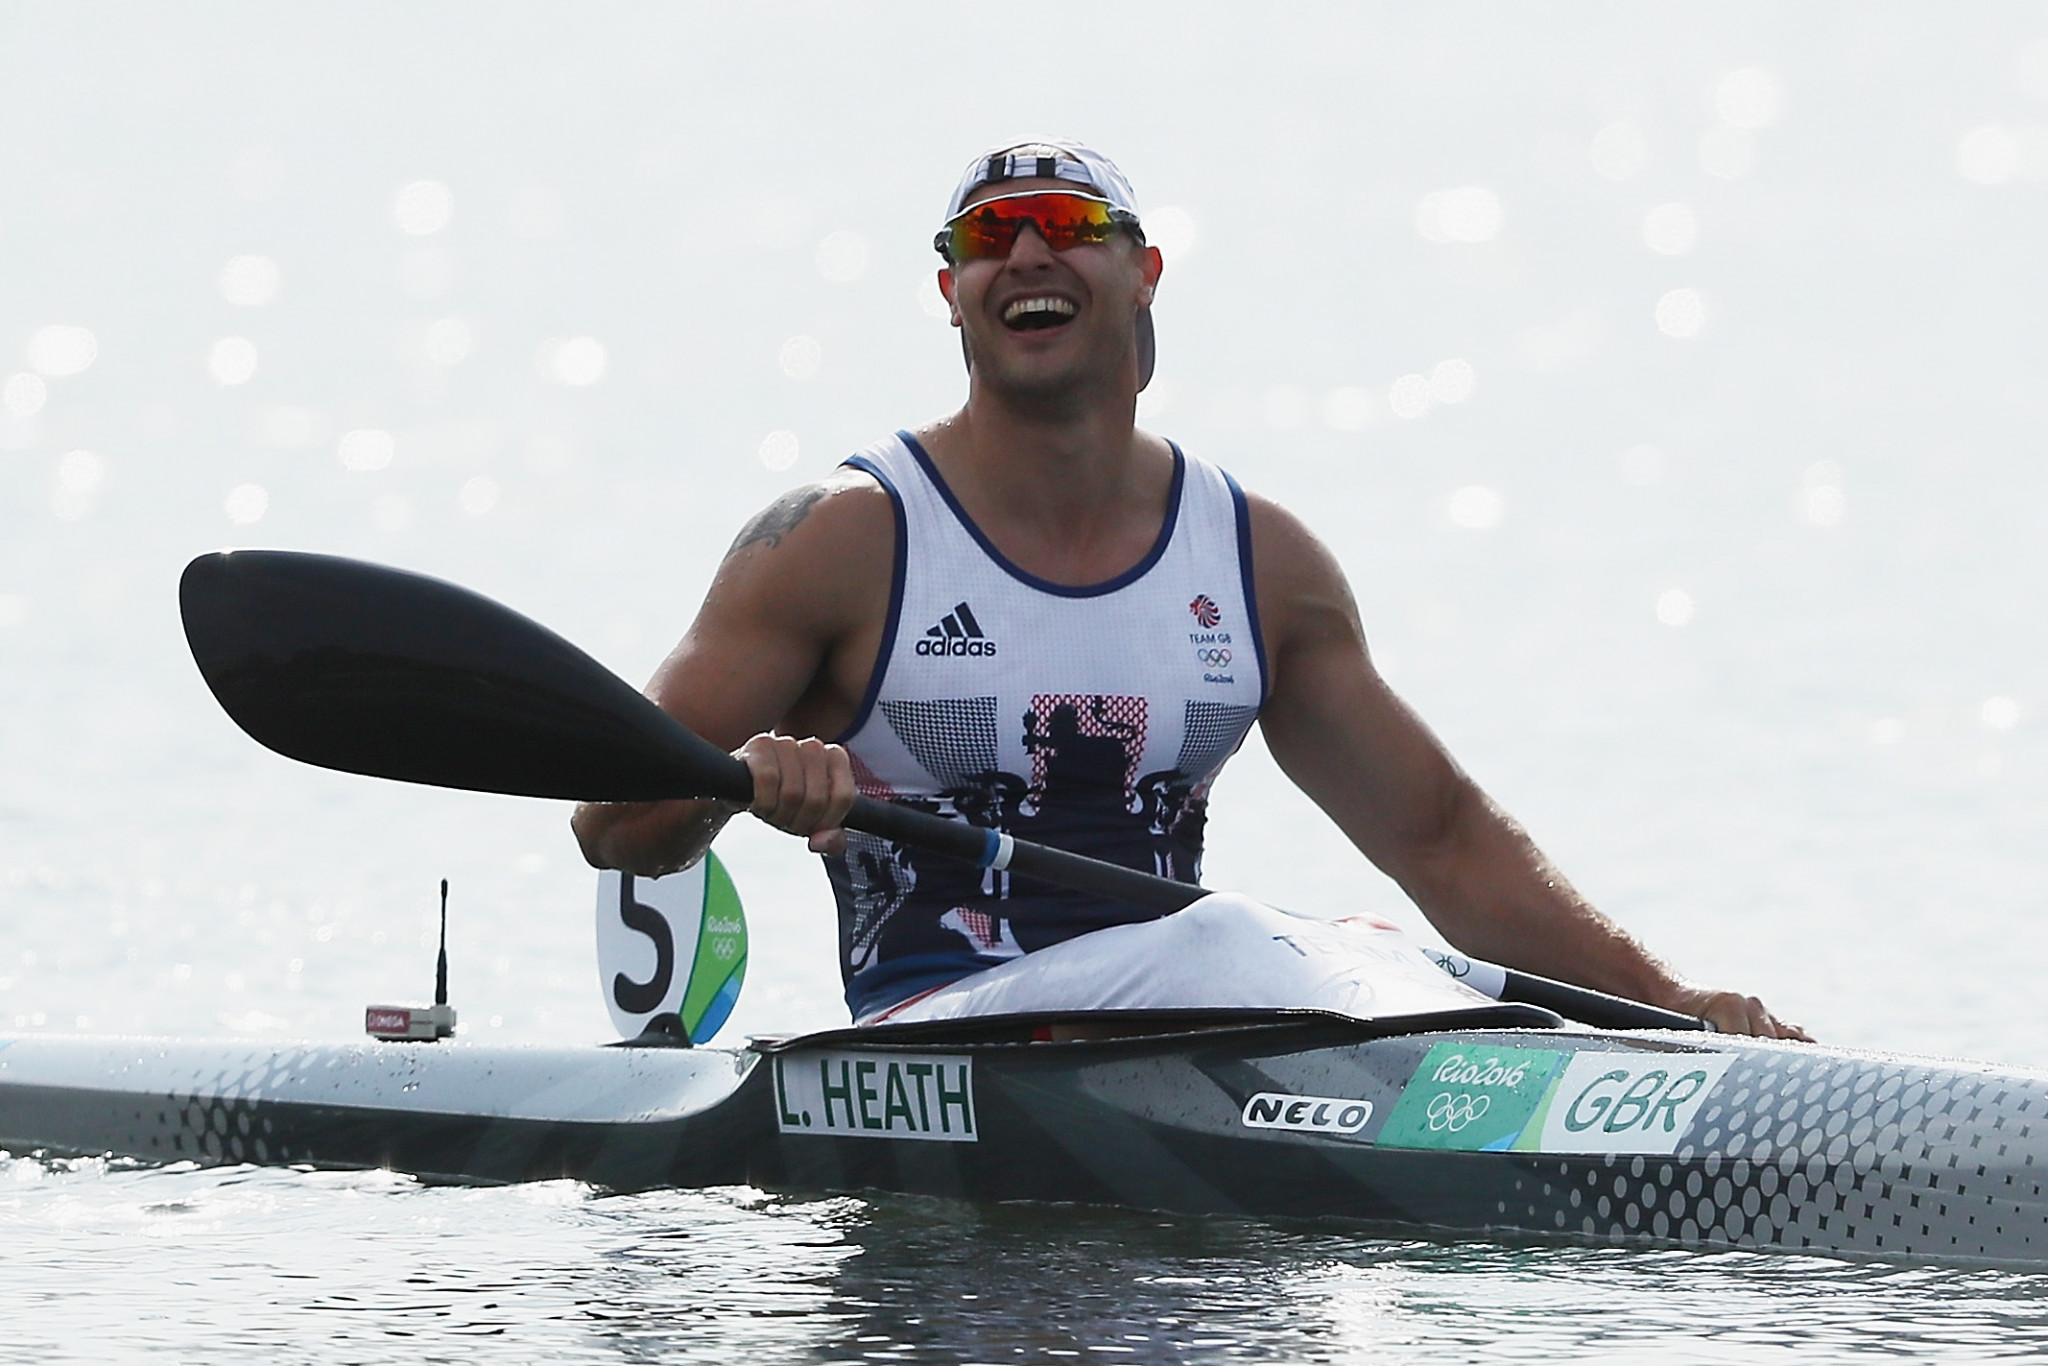  Heath heads Britain's canoe challengers for Tokyo 2020 glory